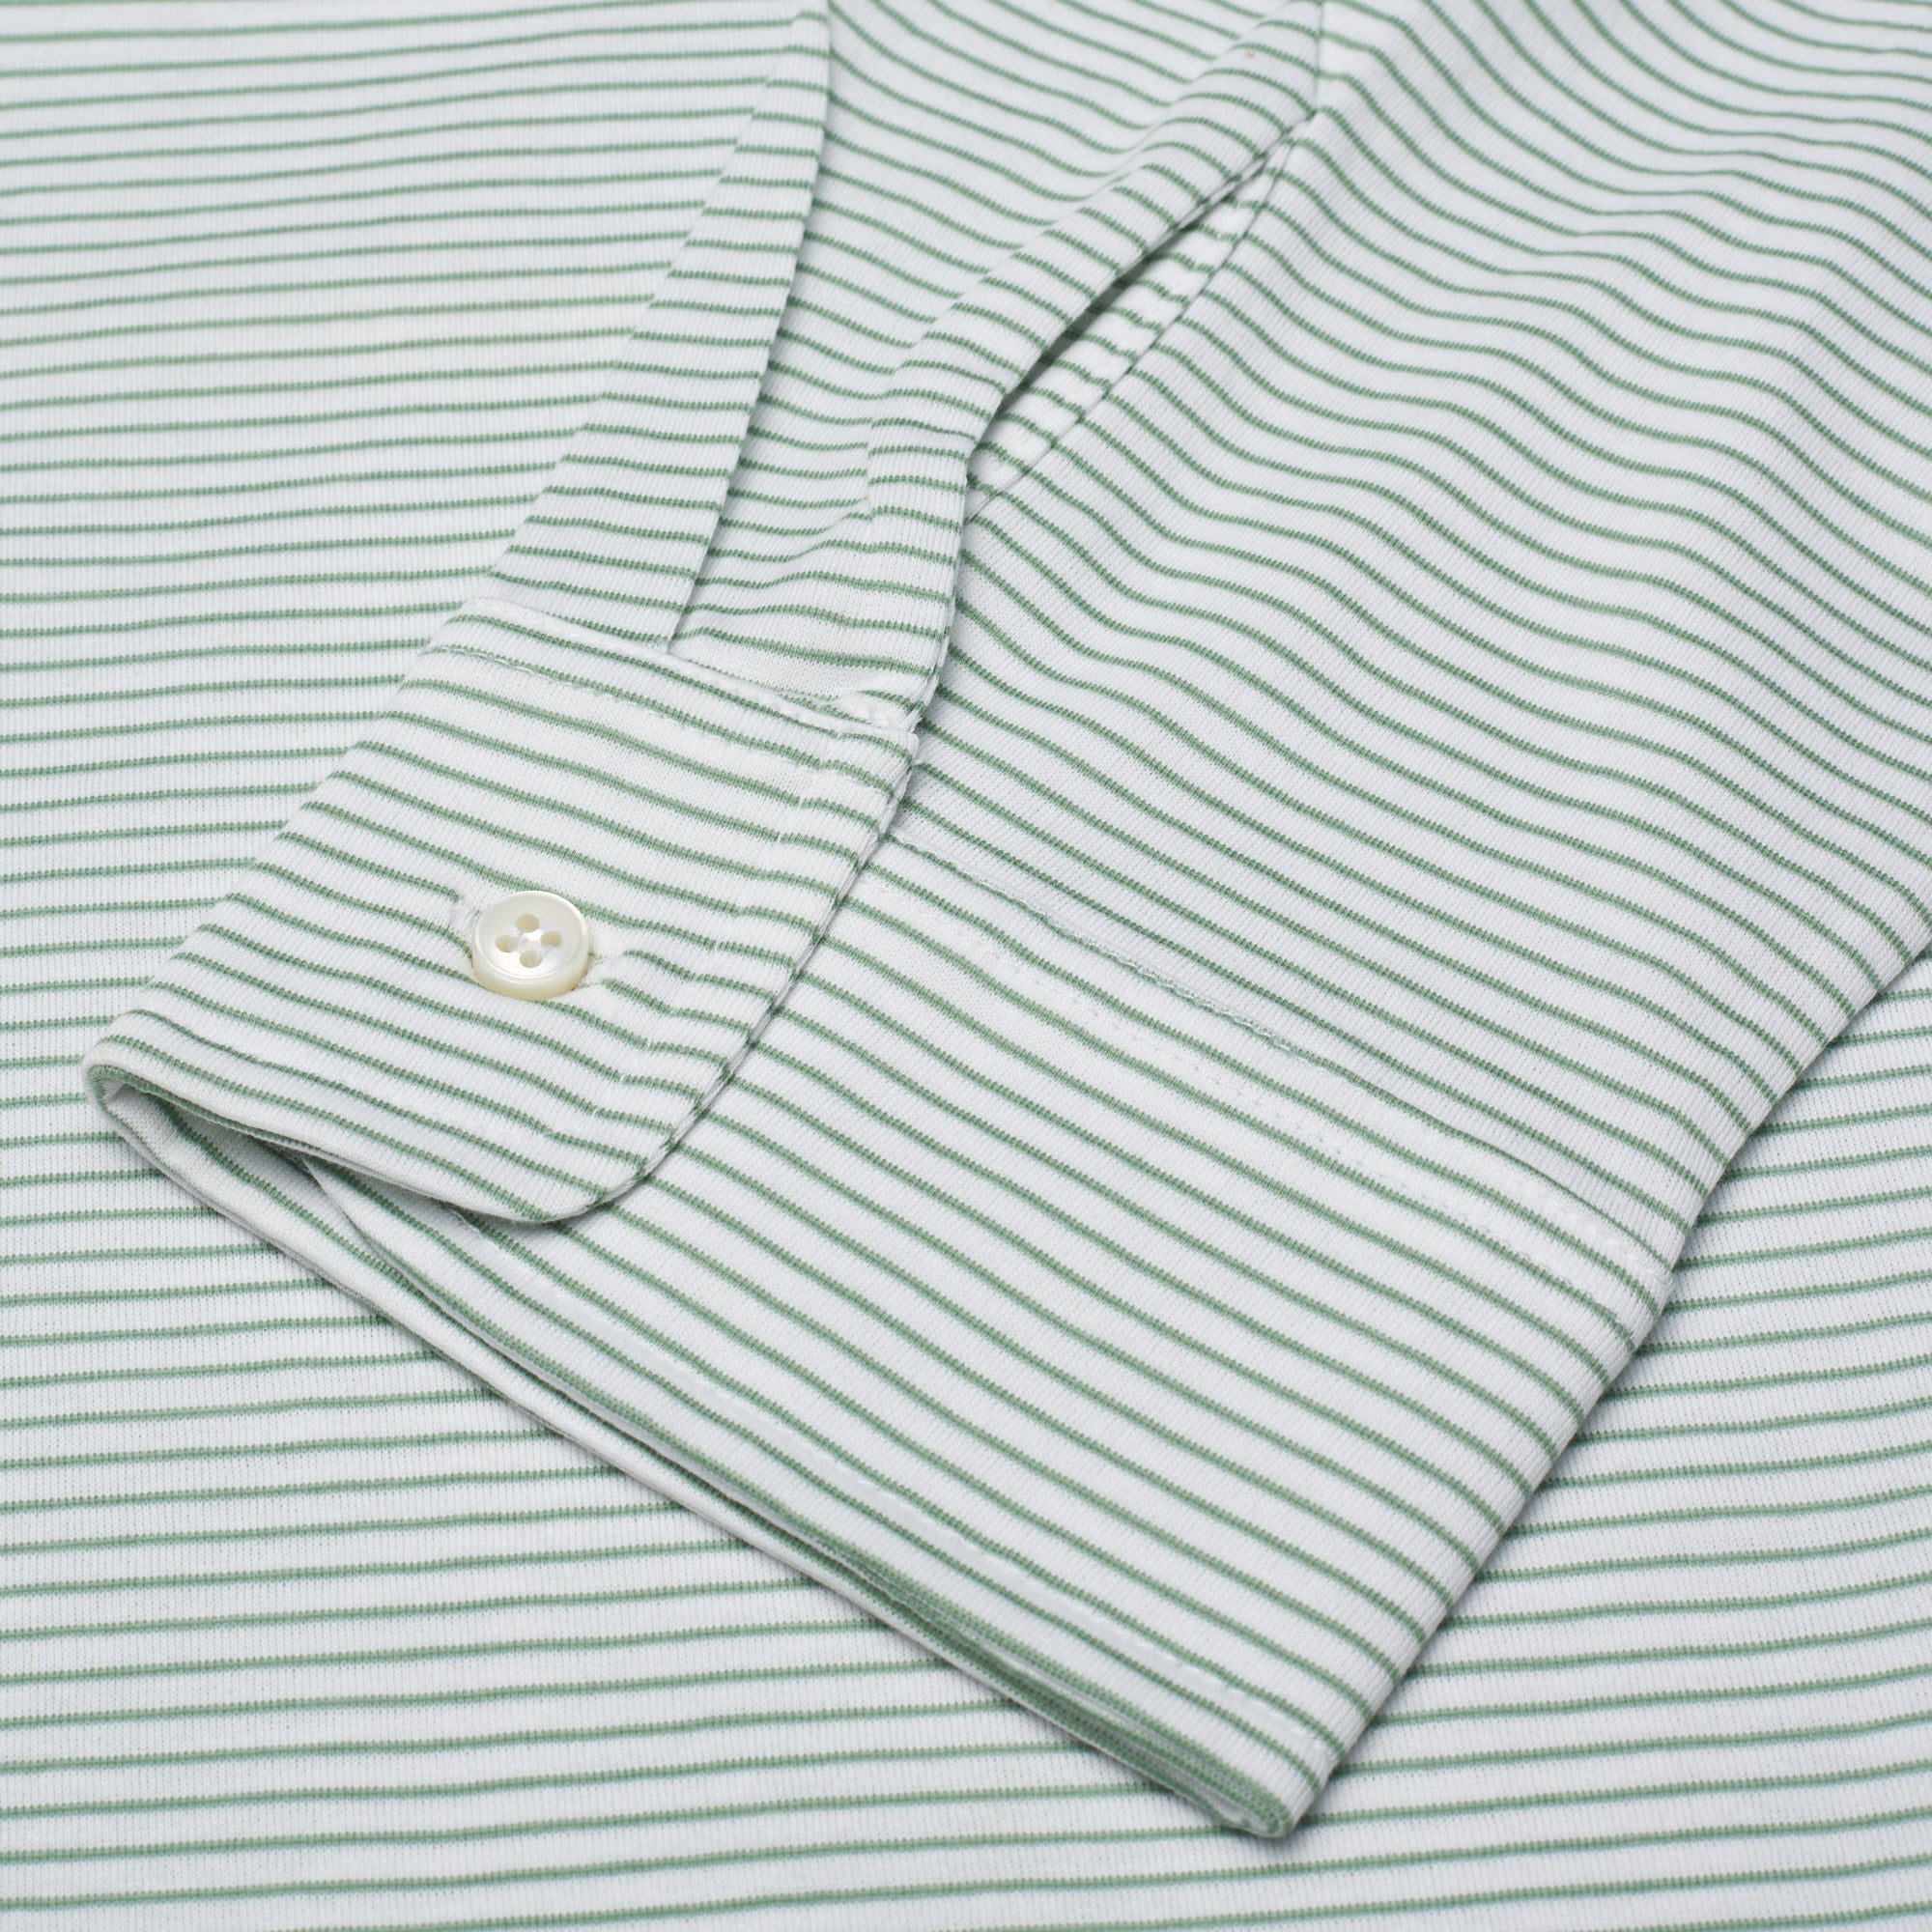 FEDELI "Libeccio" Green Striped Cotton Jersey Long Sleeve Polo Shirt EU 60 NEW US 4XL FEDELI